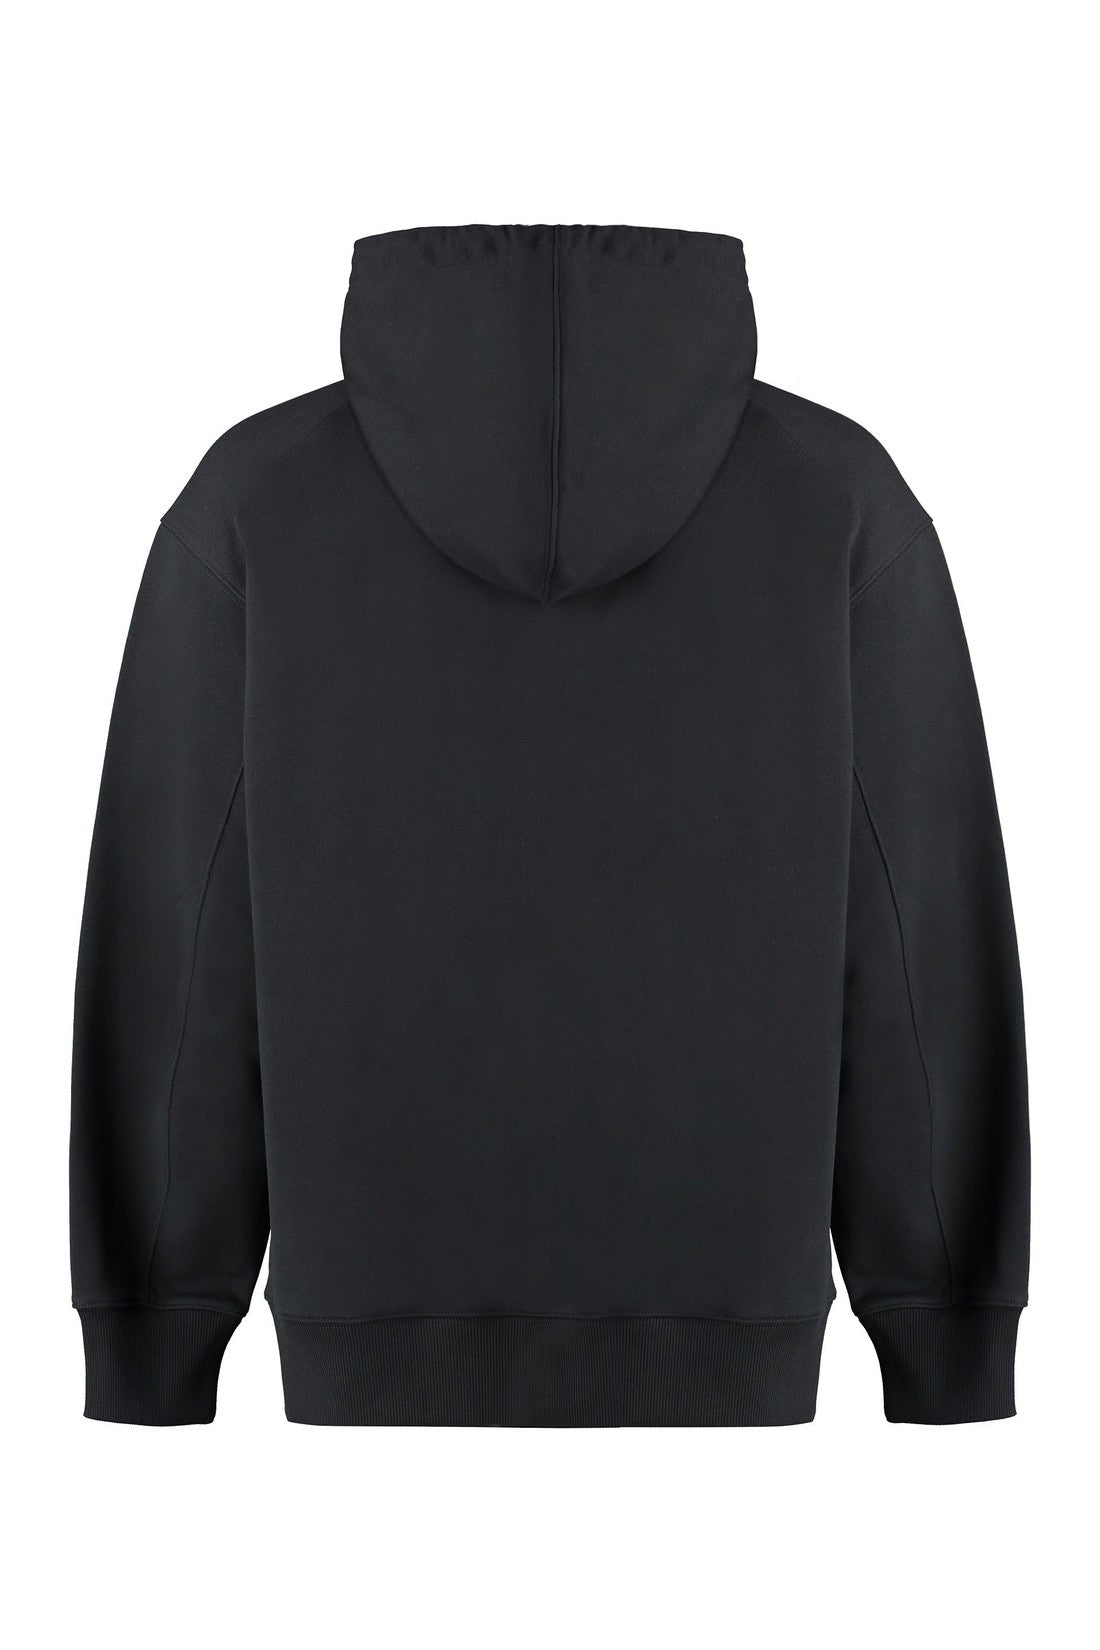 adidas Y-3-OUTLET-SALE-Cotton hoodie-ARCHIVIST